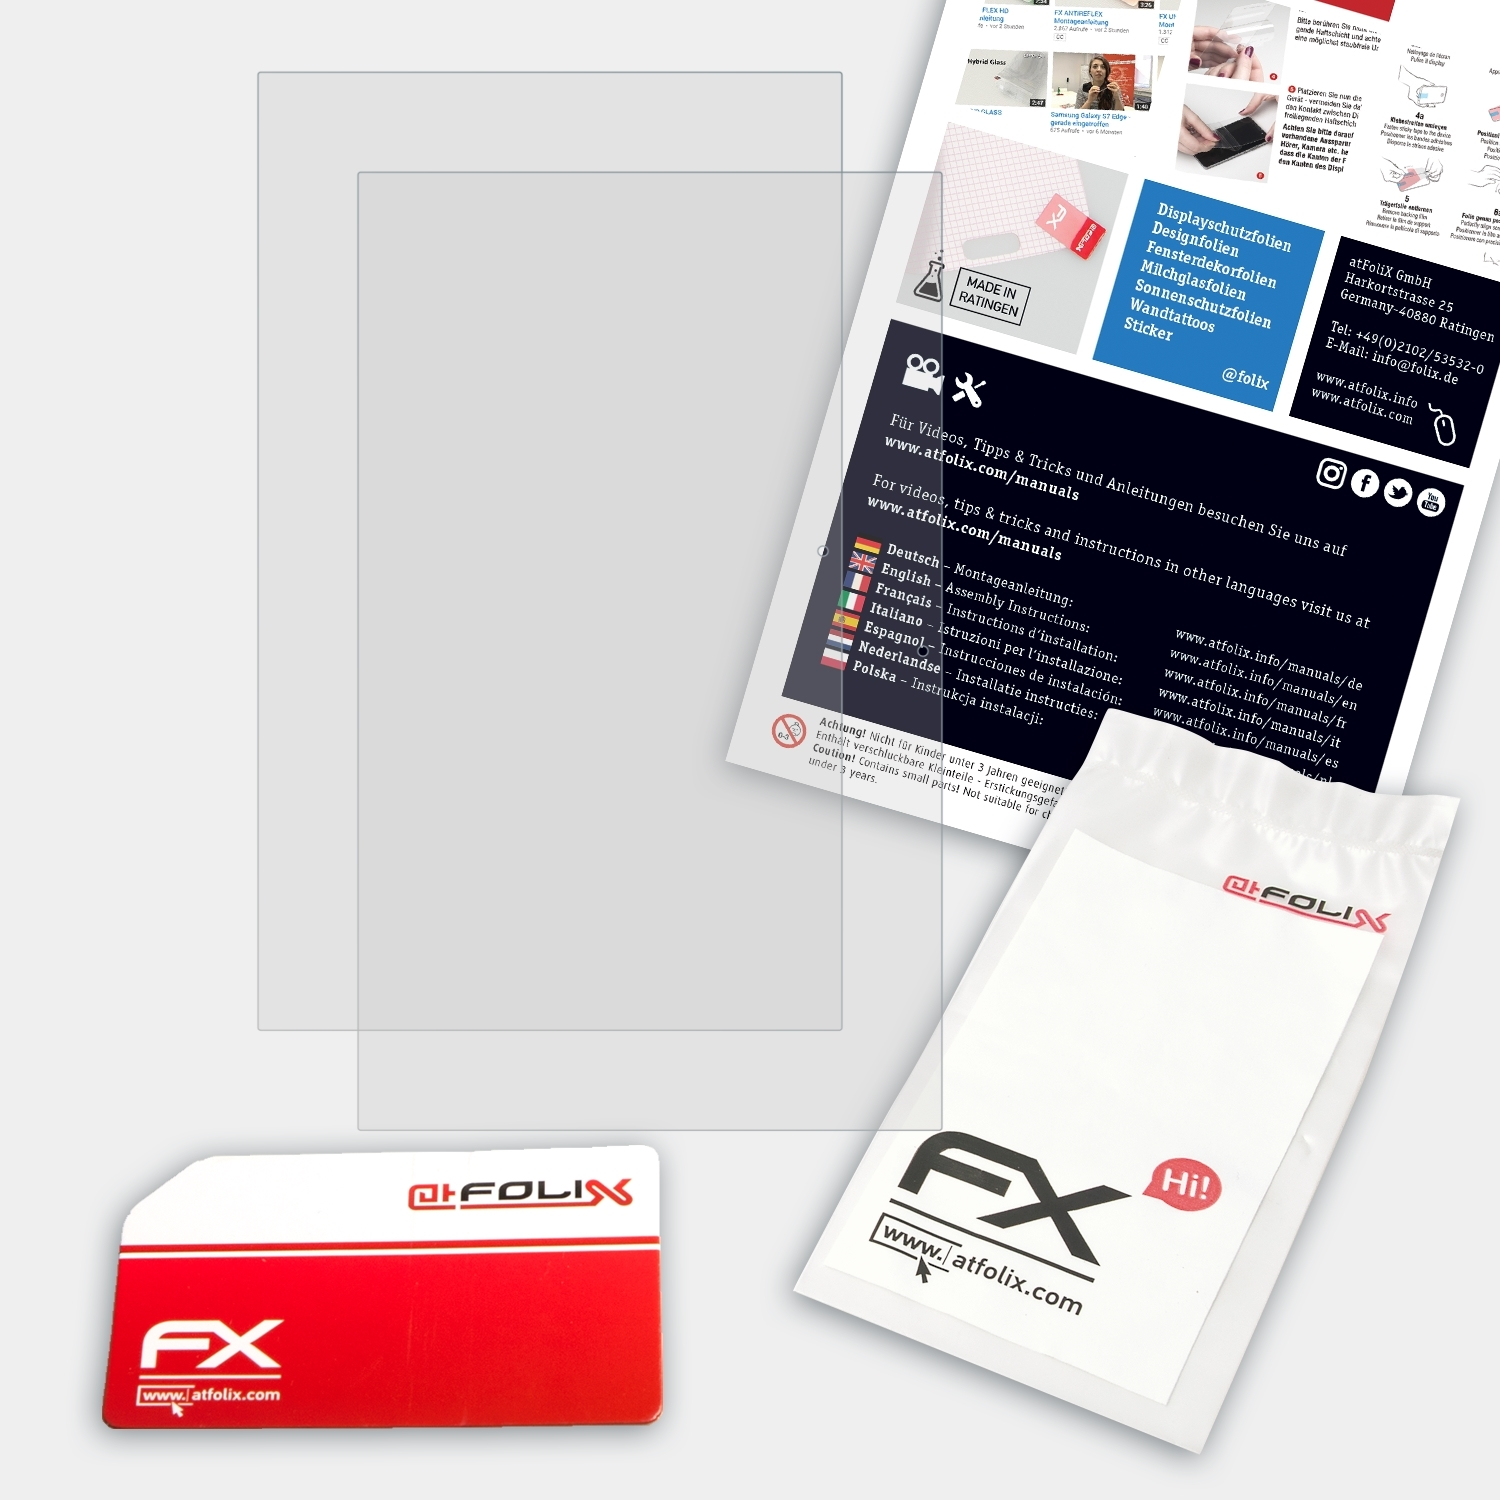 Displayschutz(für FX-Antireflex 2404 MegaPad V2) 2x Xoro ATFOLIX